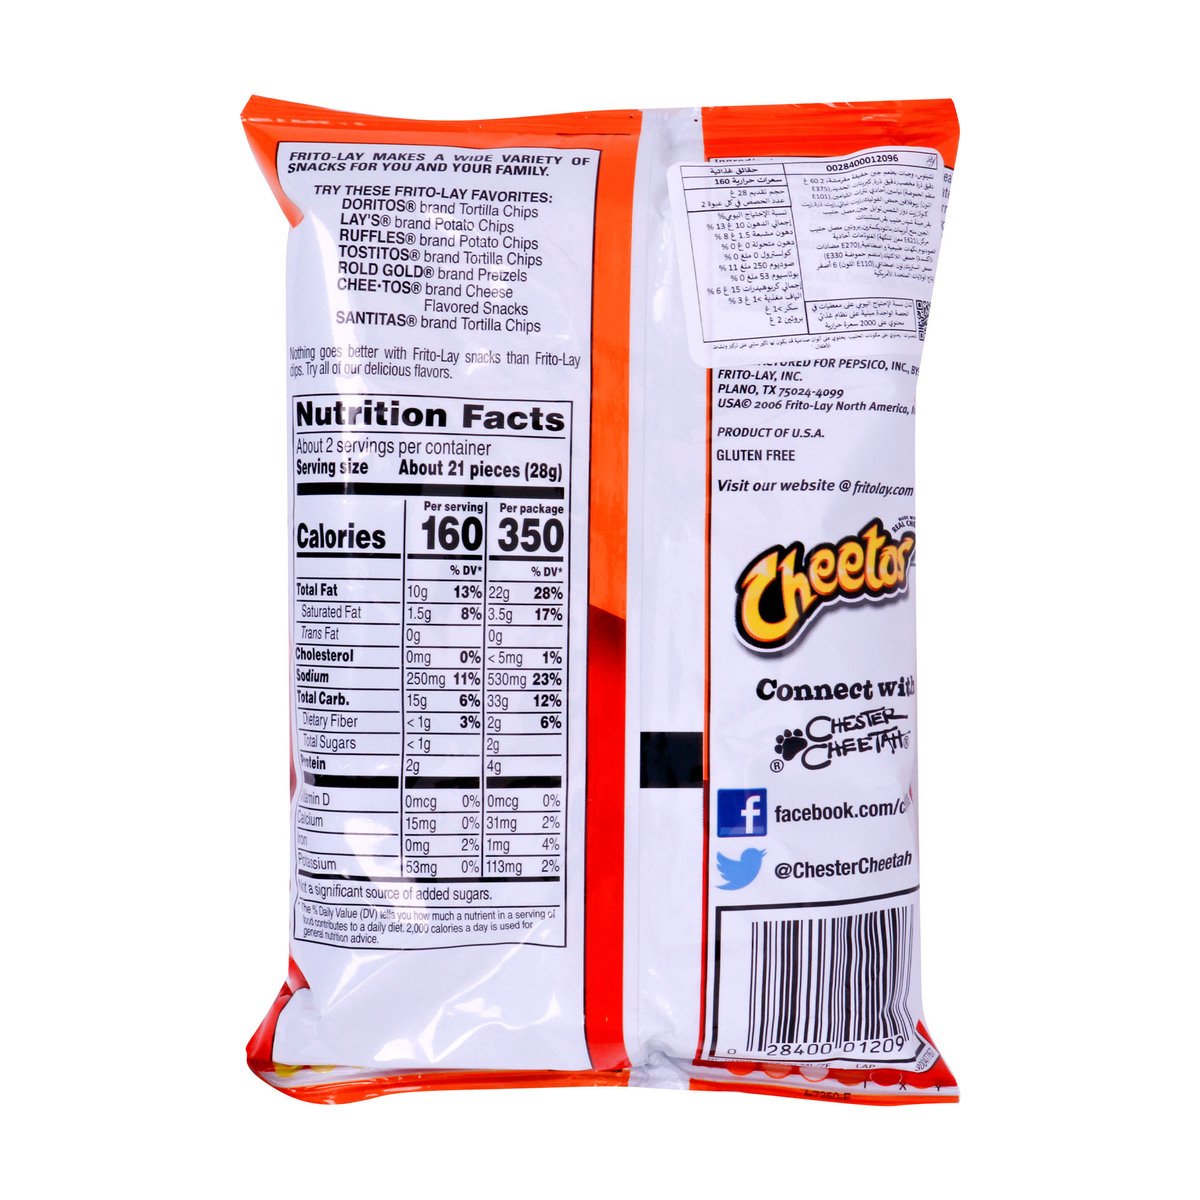 Cheetos Crunchy Cheese 60g